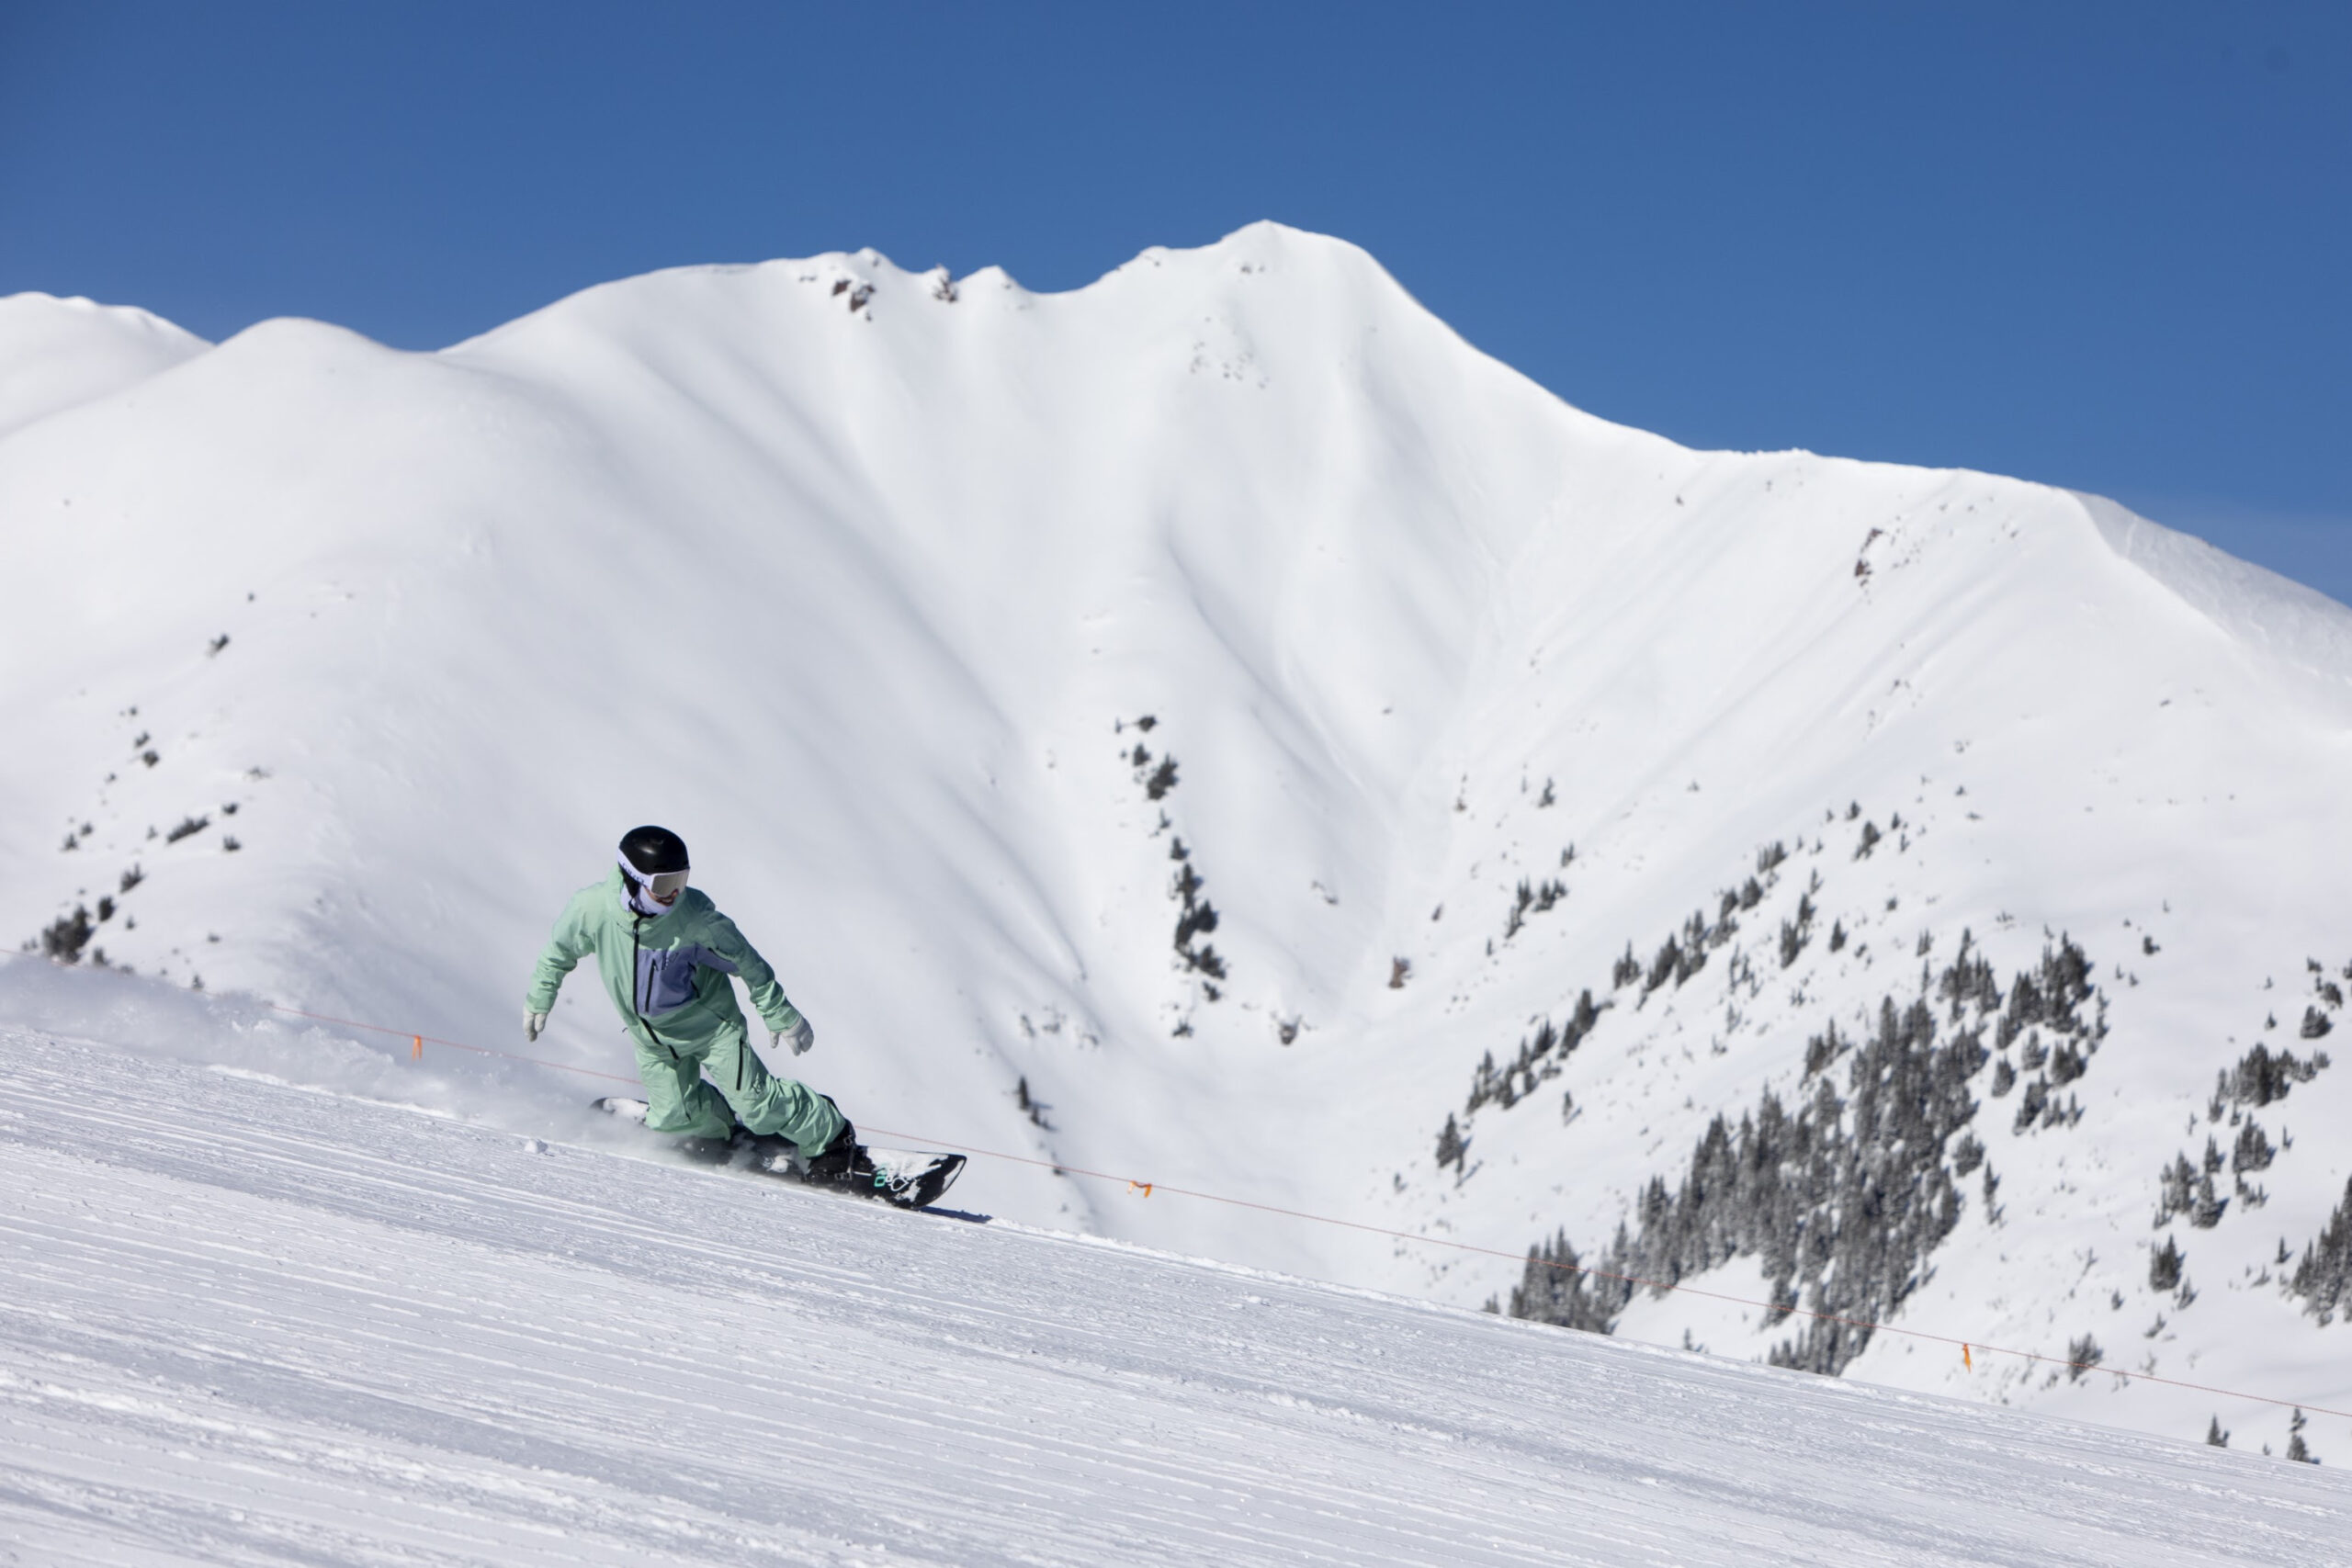 Aspen Snowmass extenderá la temporada en Aspen Highlands y Aspen Mountain